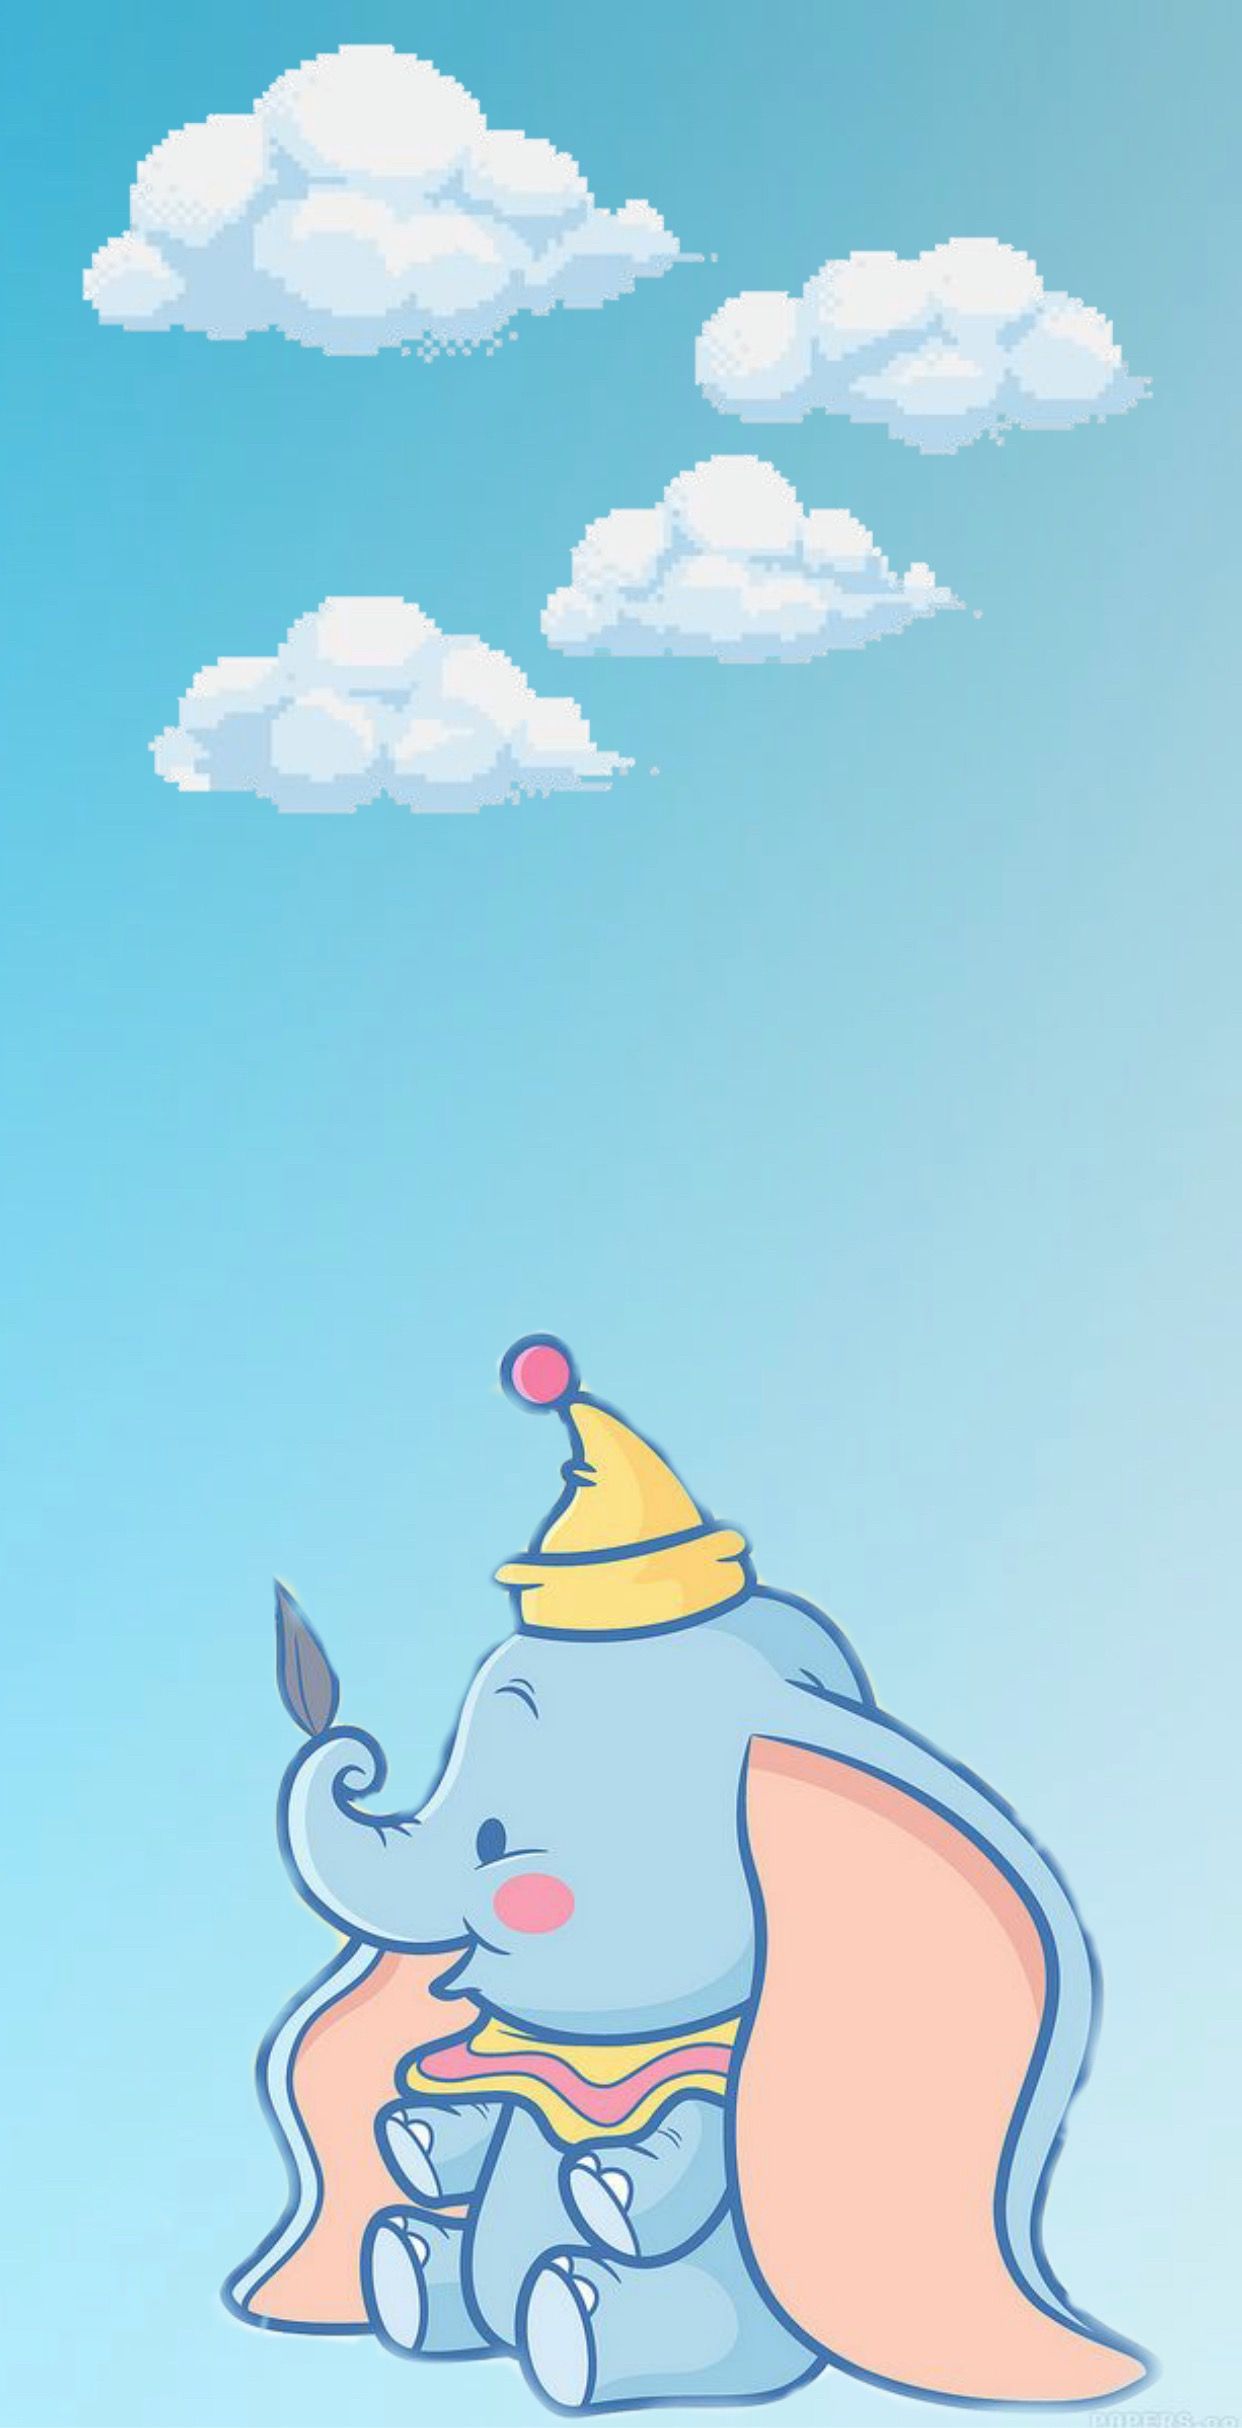 Disneys Dumbo Circus Wallpaper  Disneyclipscom